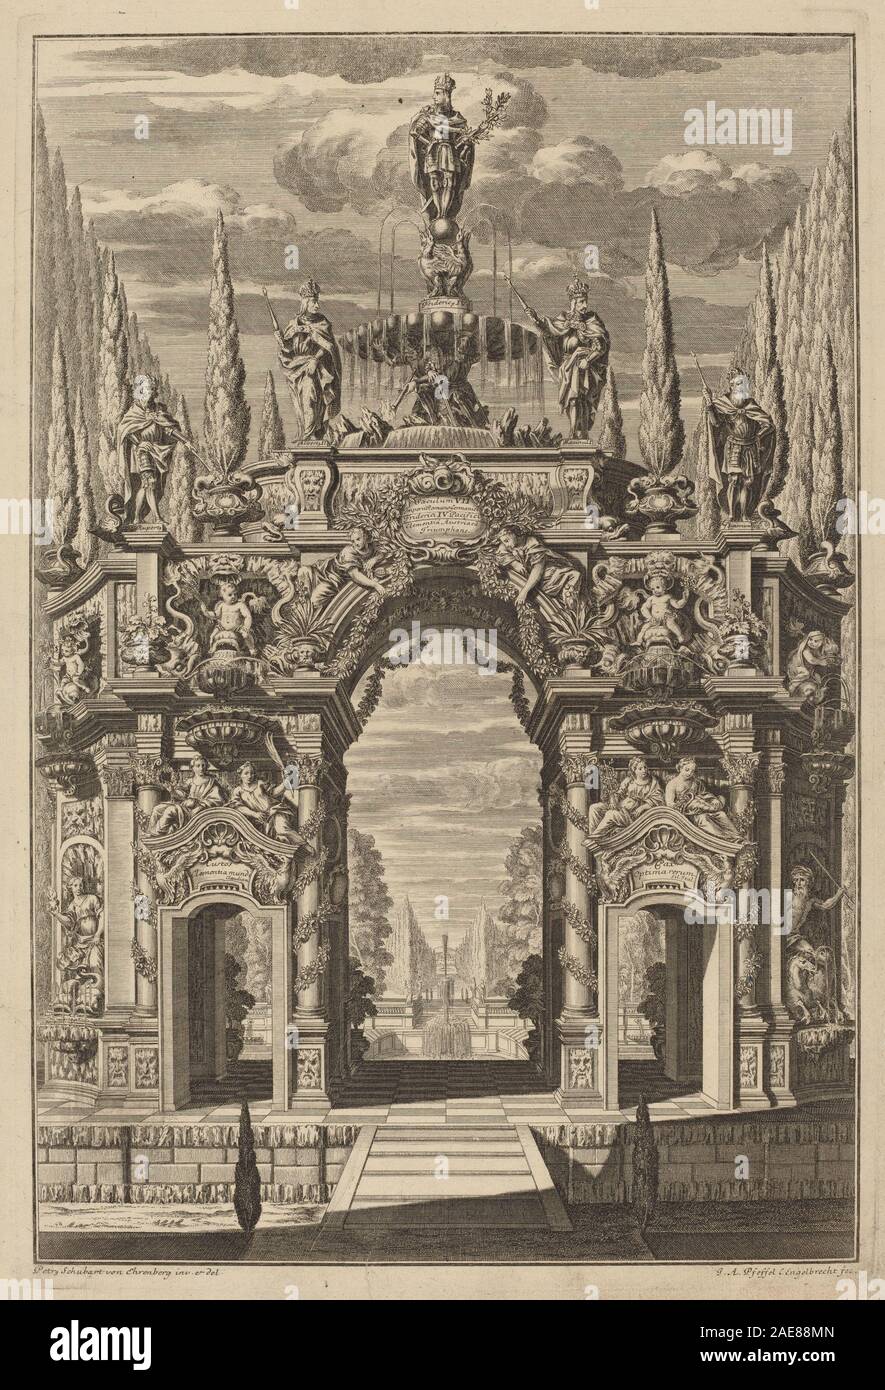 Arco trionfale per Friedrich IV; 1725data Engelbrecht cristiana e Johann Andreas Pfeffel, dopo Peter Schubert von Ehrenberg, arco trionfale per Friedrich IV, 1725 Foto Stock